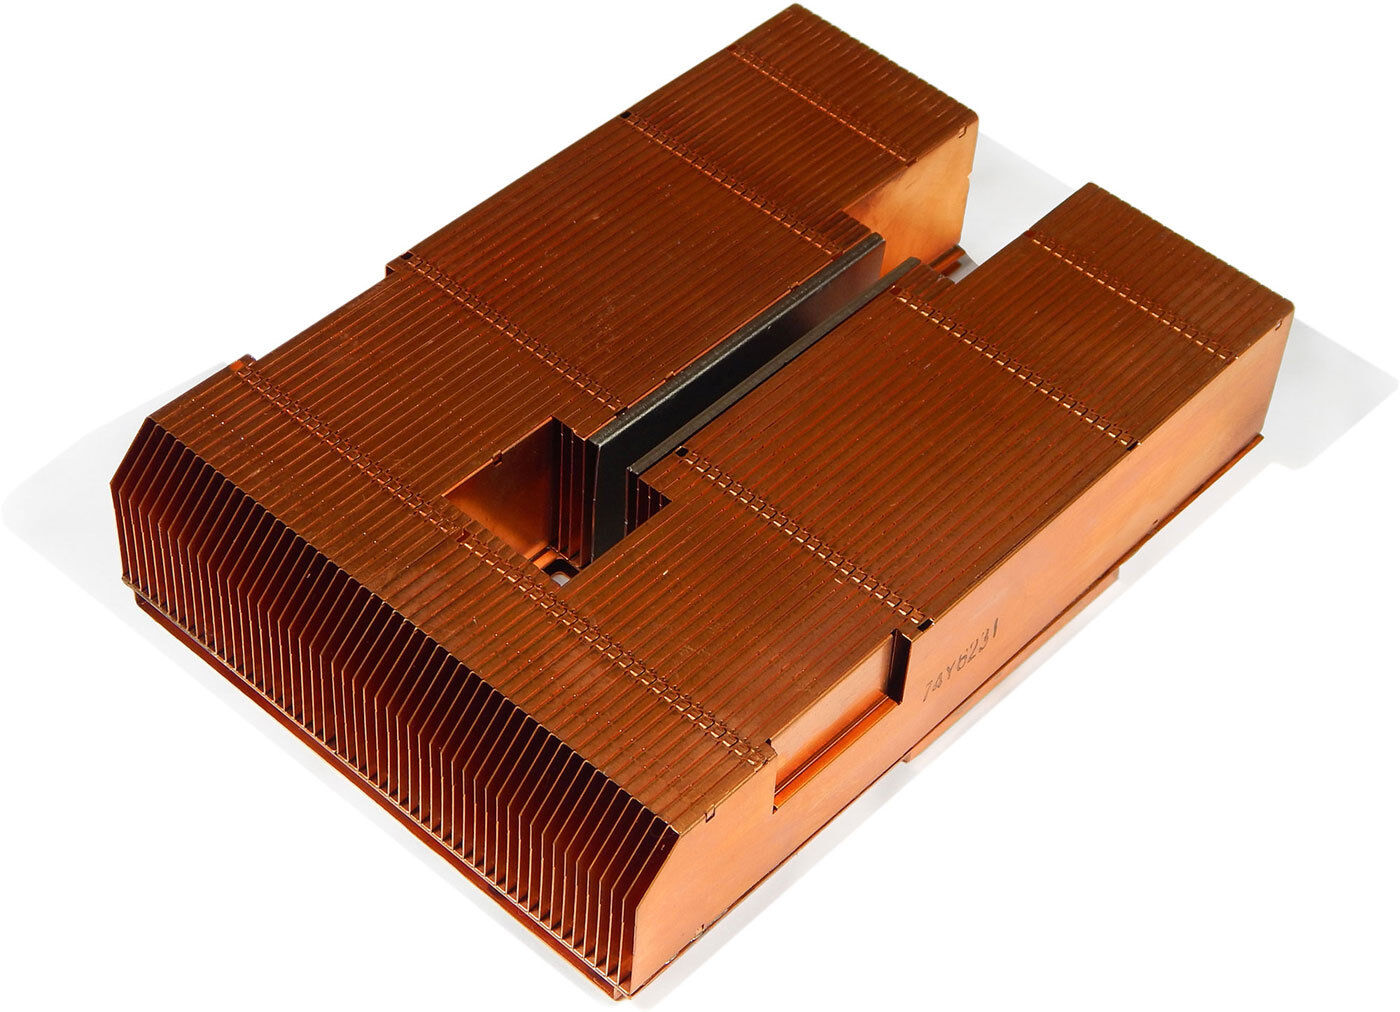 IBM MT7895 Power7 Processor CPU Copper Heatsink 74Y6231